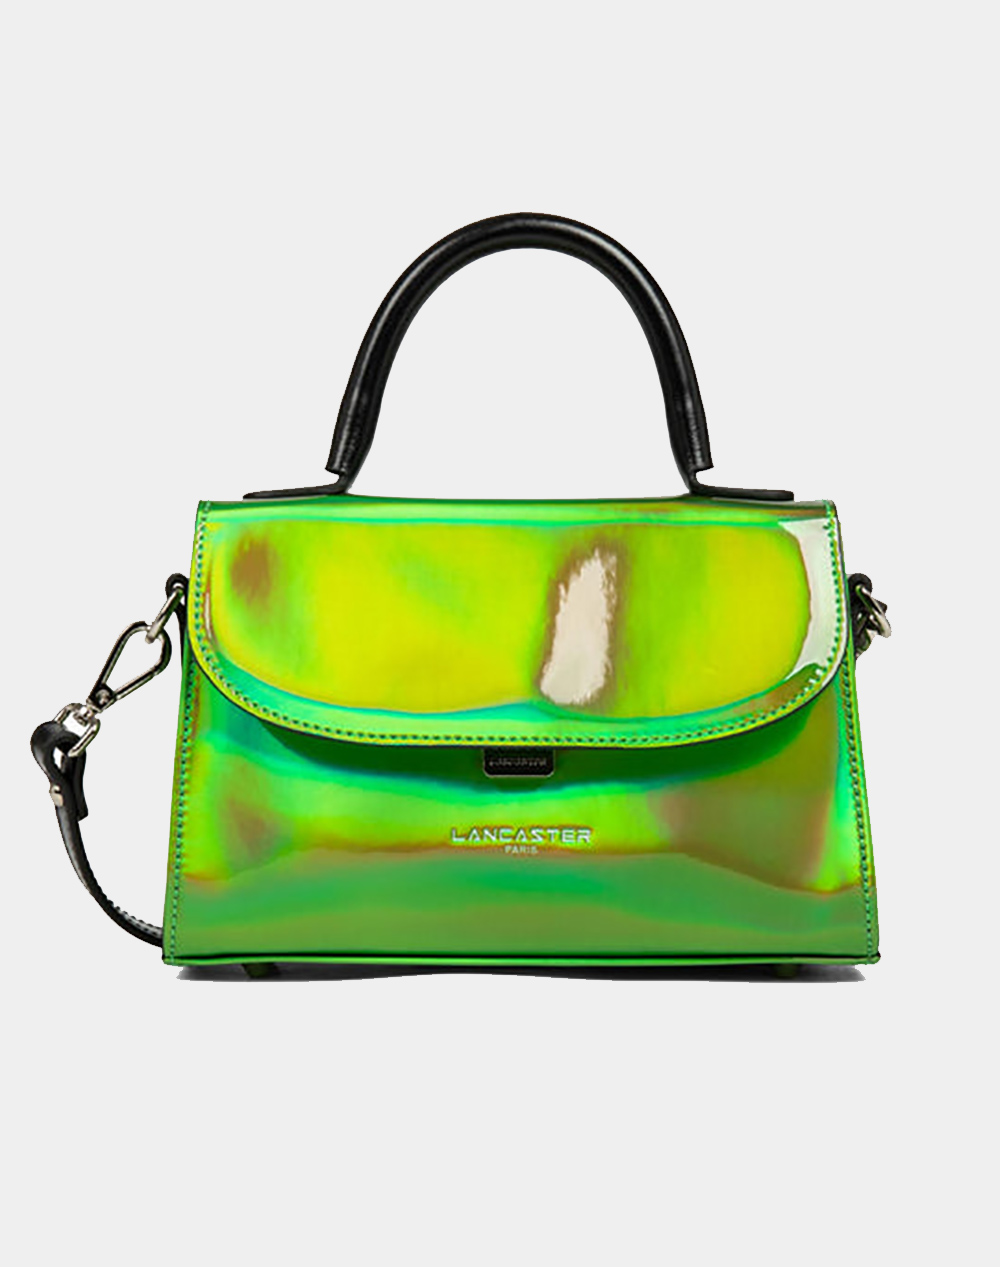 LANCASTER Τσάντα Handbag Glass Irio (Διαστάσεις: 21 x 14 x 7 εκ.) 433-41-a.1216 Green